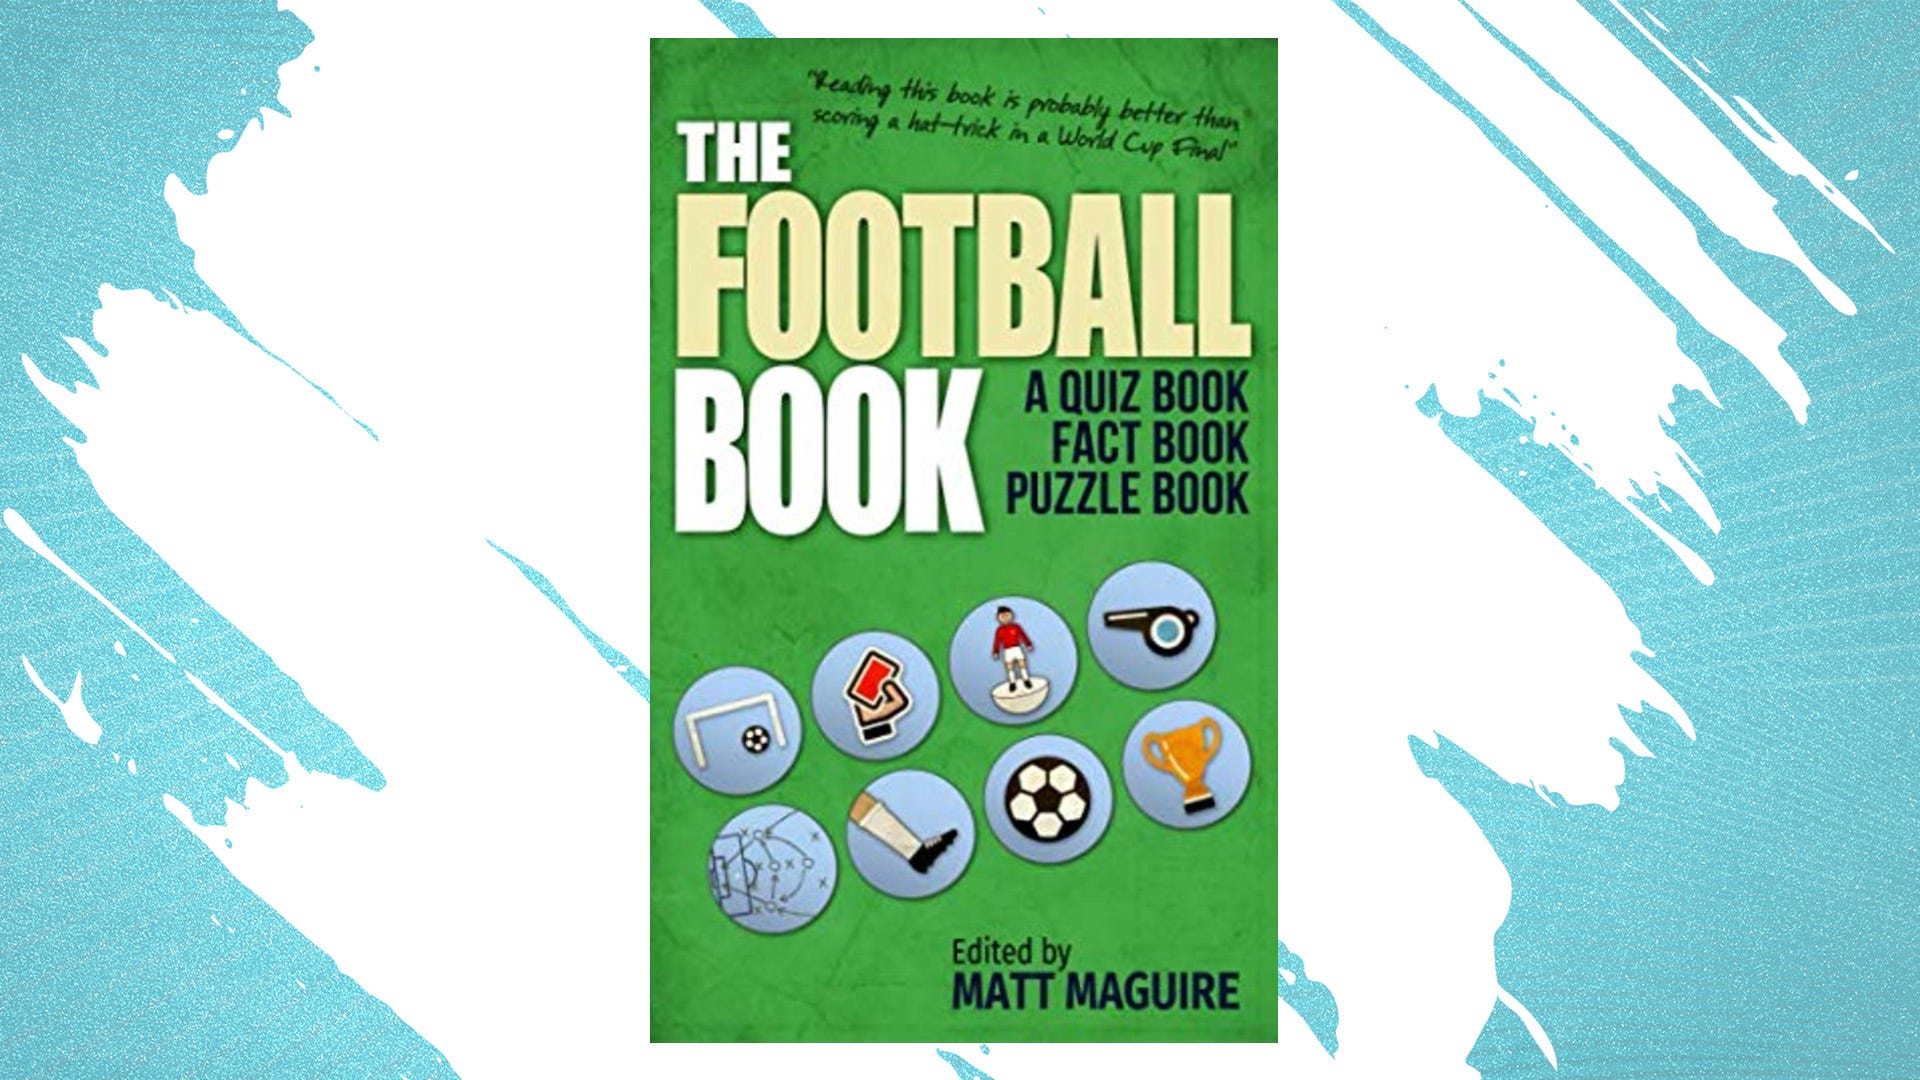 The Football Quiz book